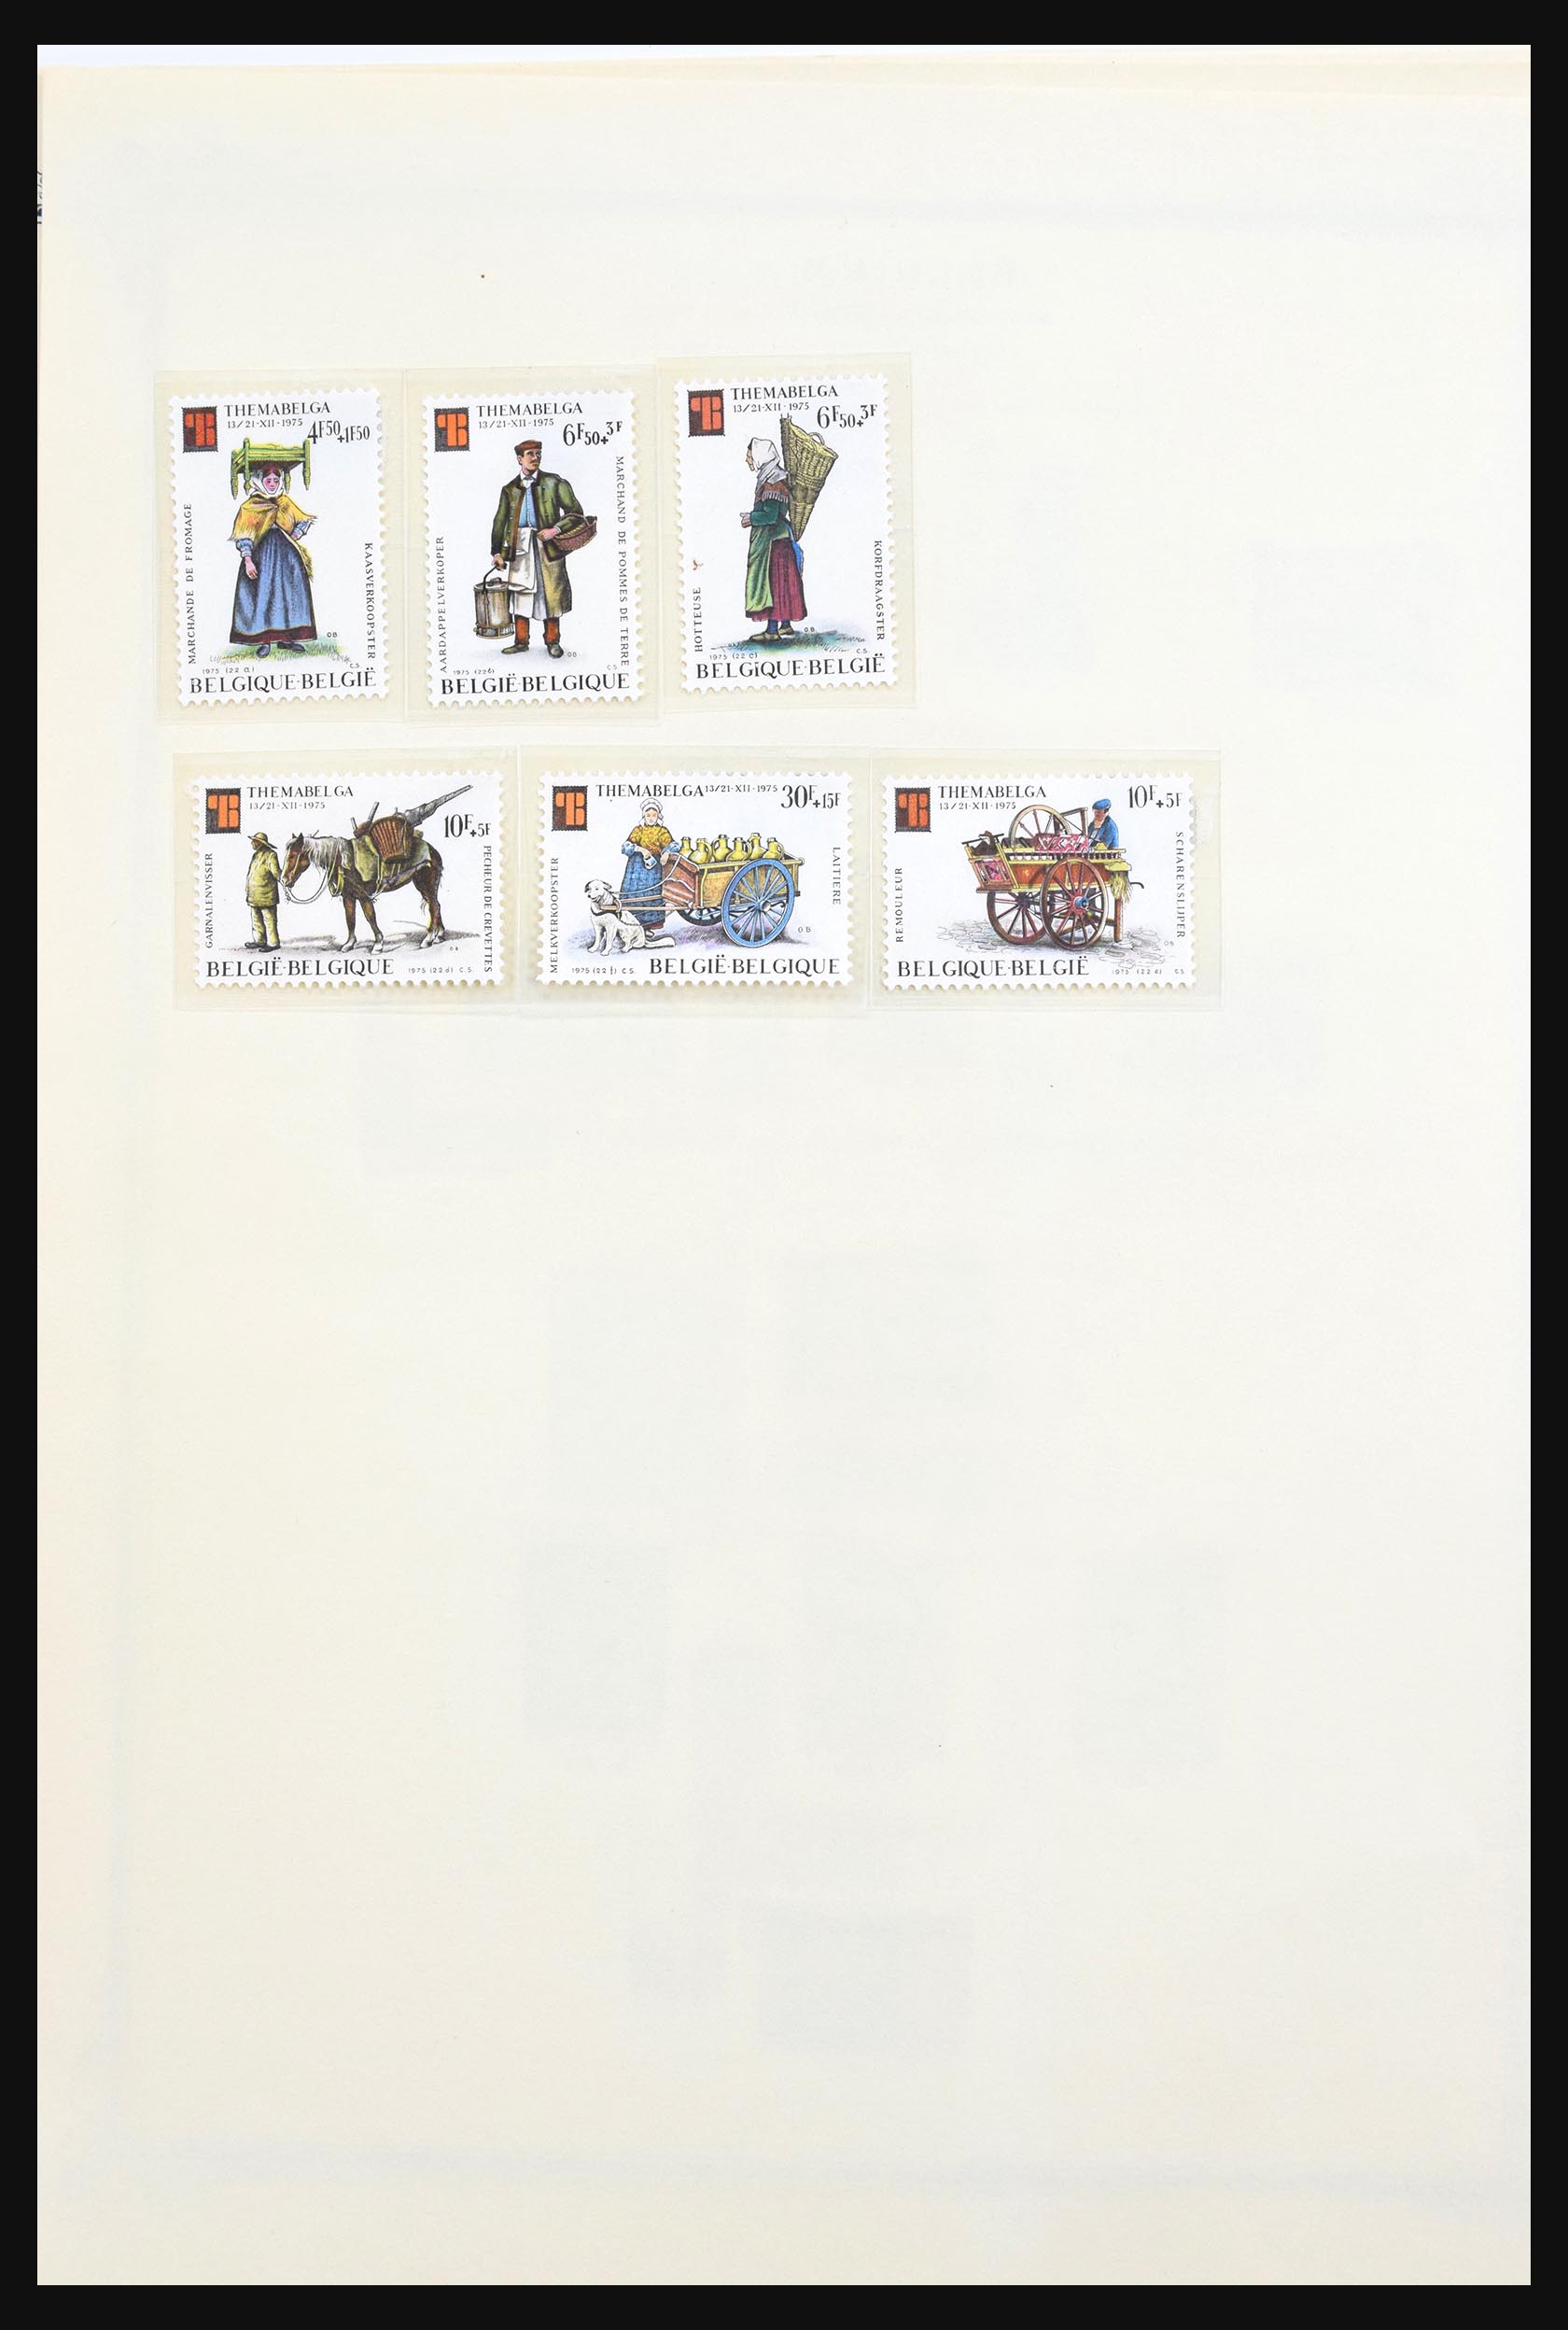 30702 291 - 30702 België 1849-2004.